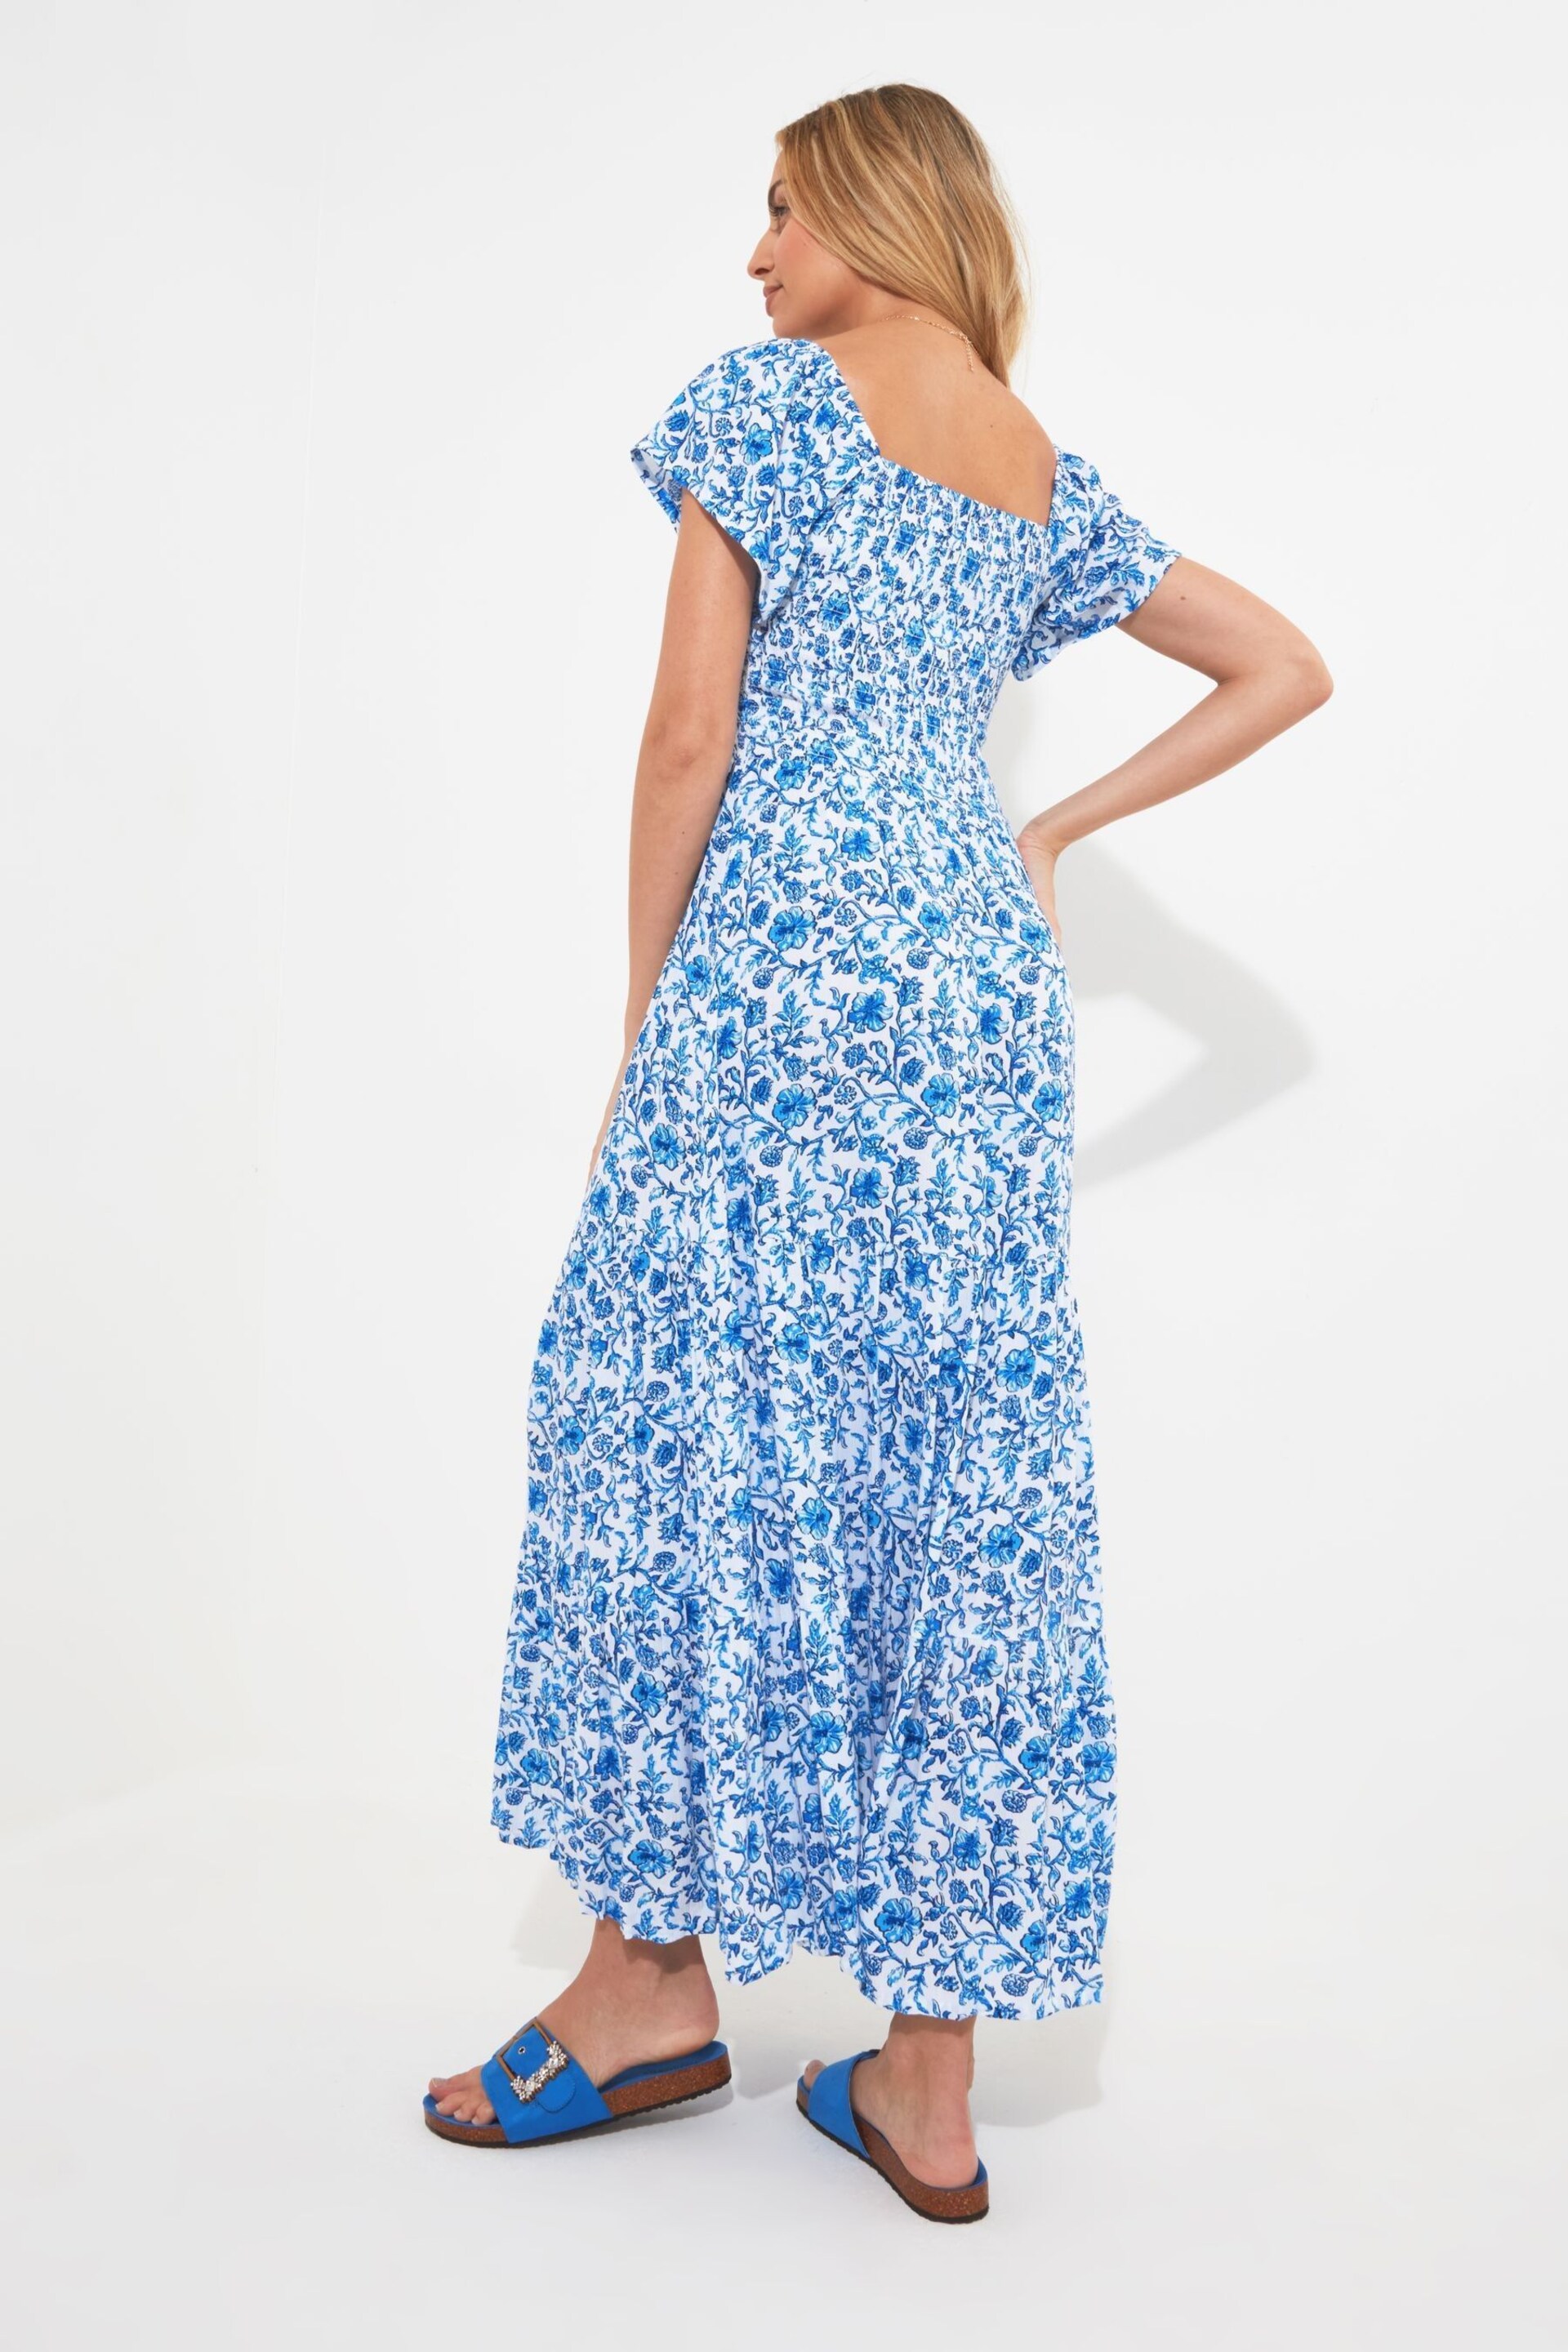 Joe Browns Blue Floral Shirred Waist Short Sleeve Maxi Dress - Image 3 of 5